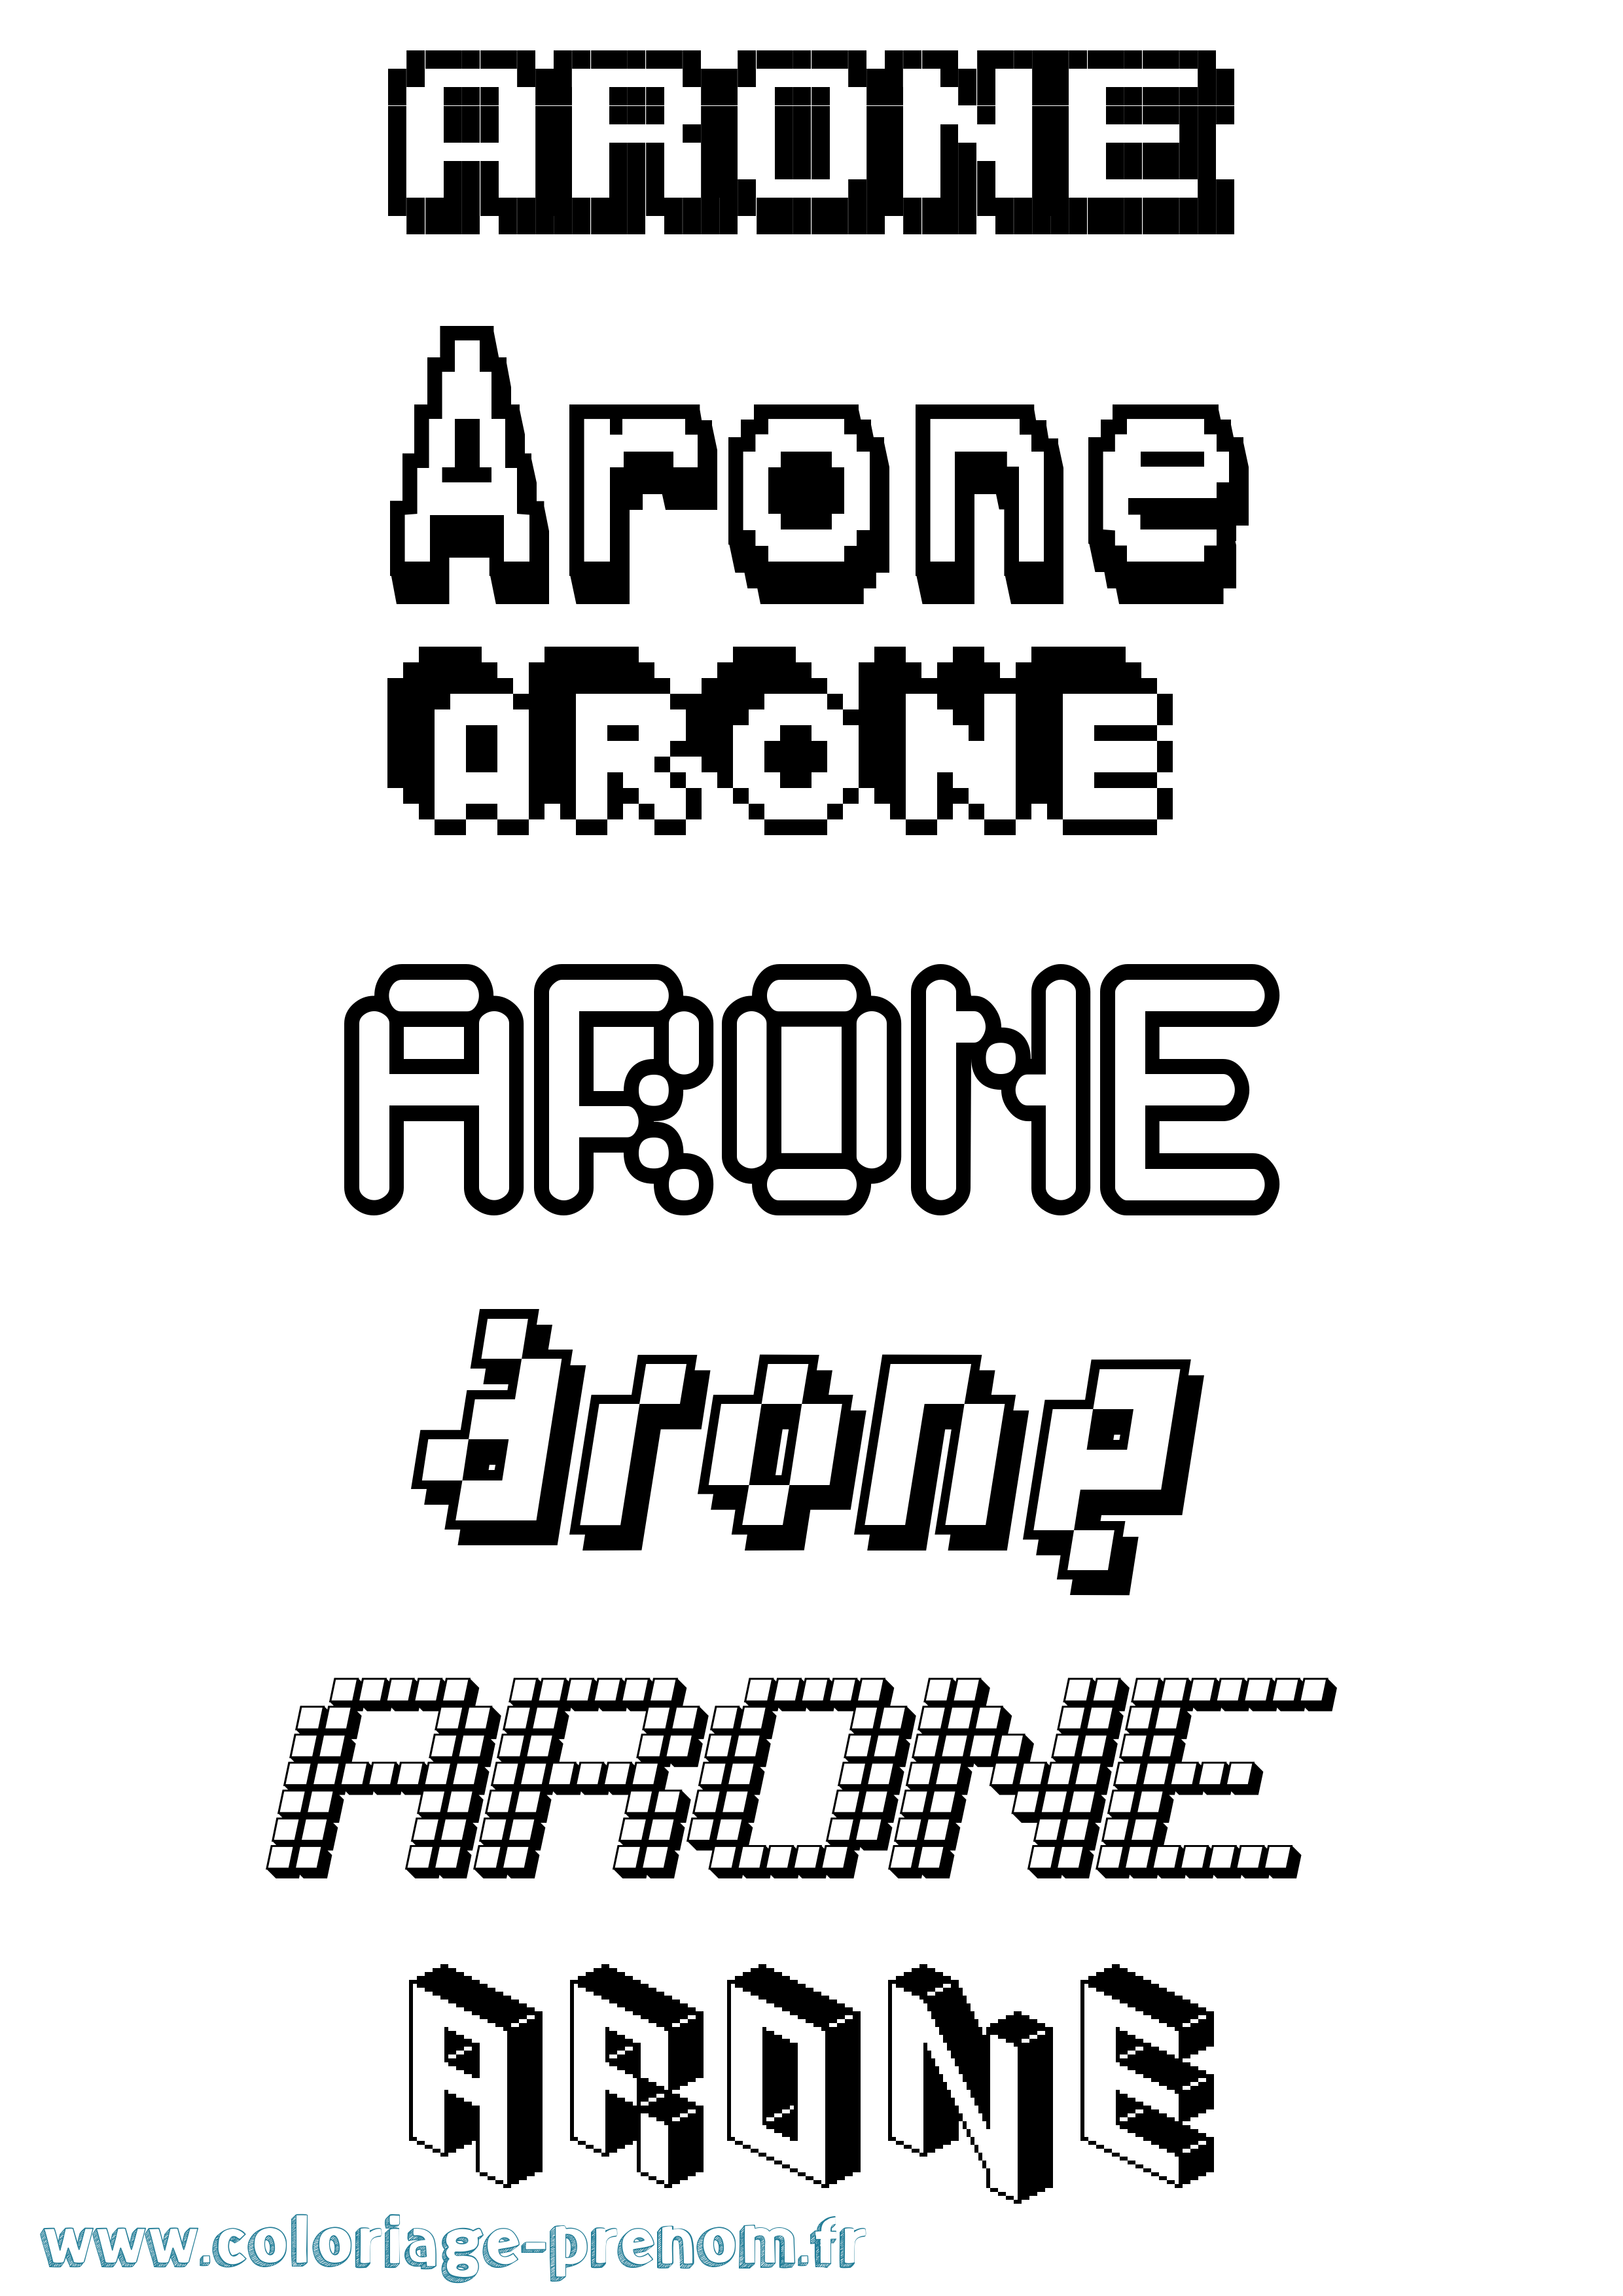 Coloriage prénom Arone Pixel